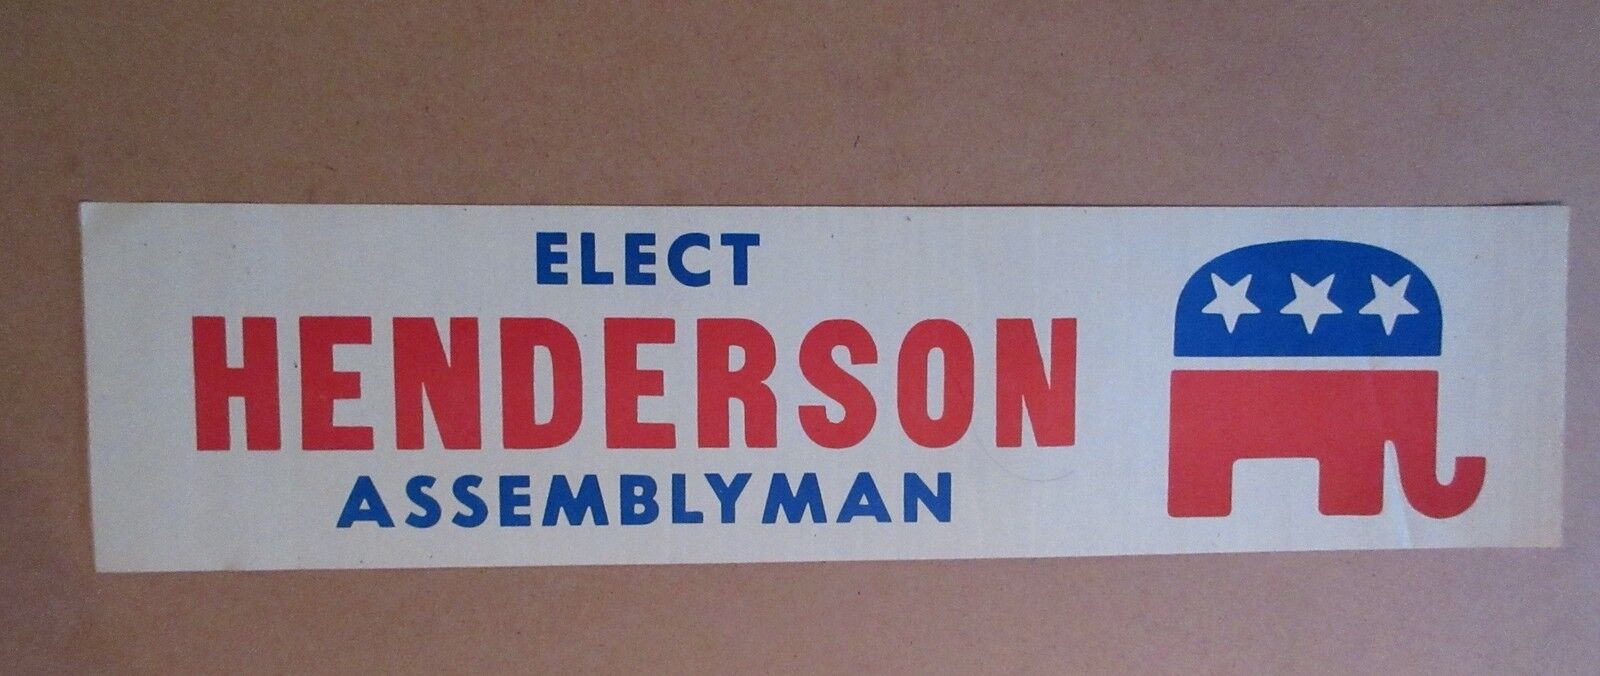 ELECT HENDERSON ASSEMBLYMAN VINTAGE Bumper Sticker early 1970\'s